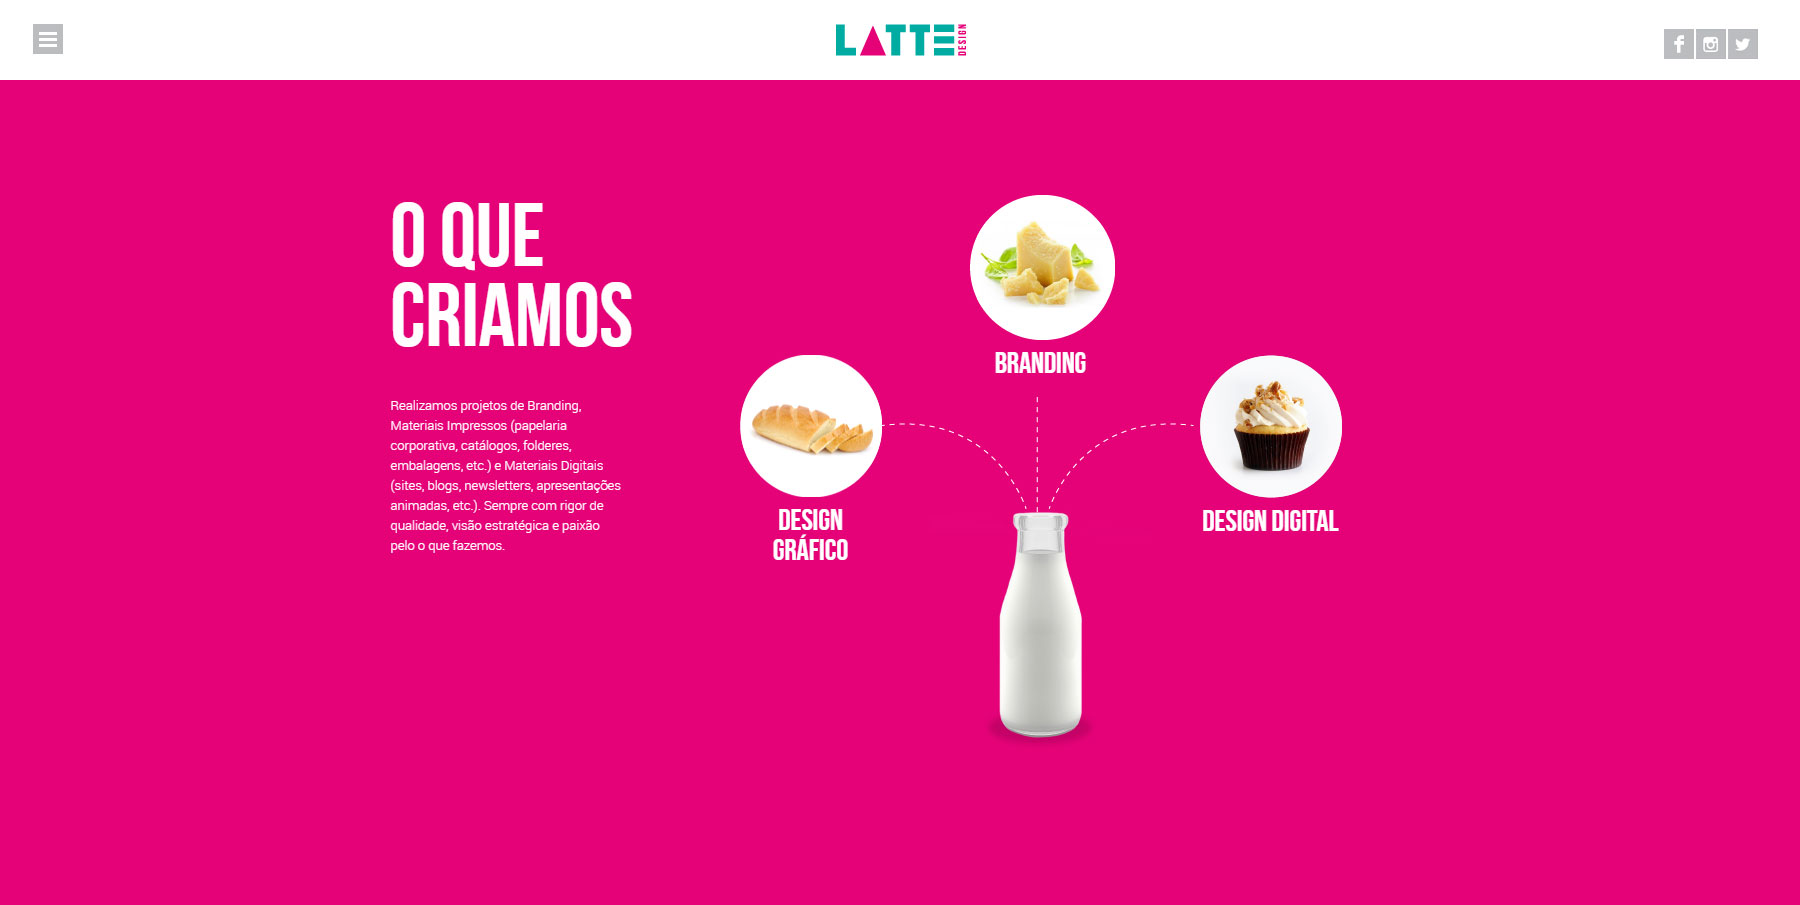 Latte Design - Website of the Day